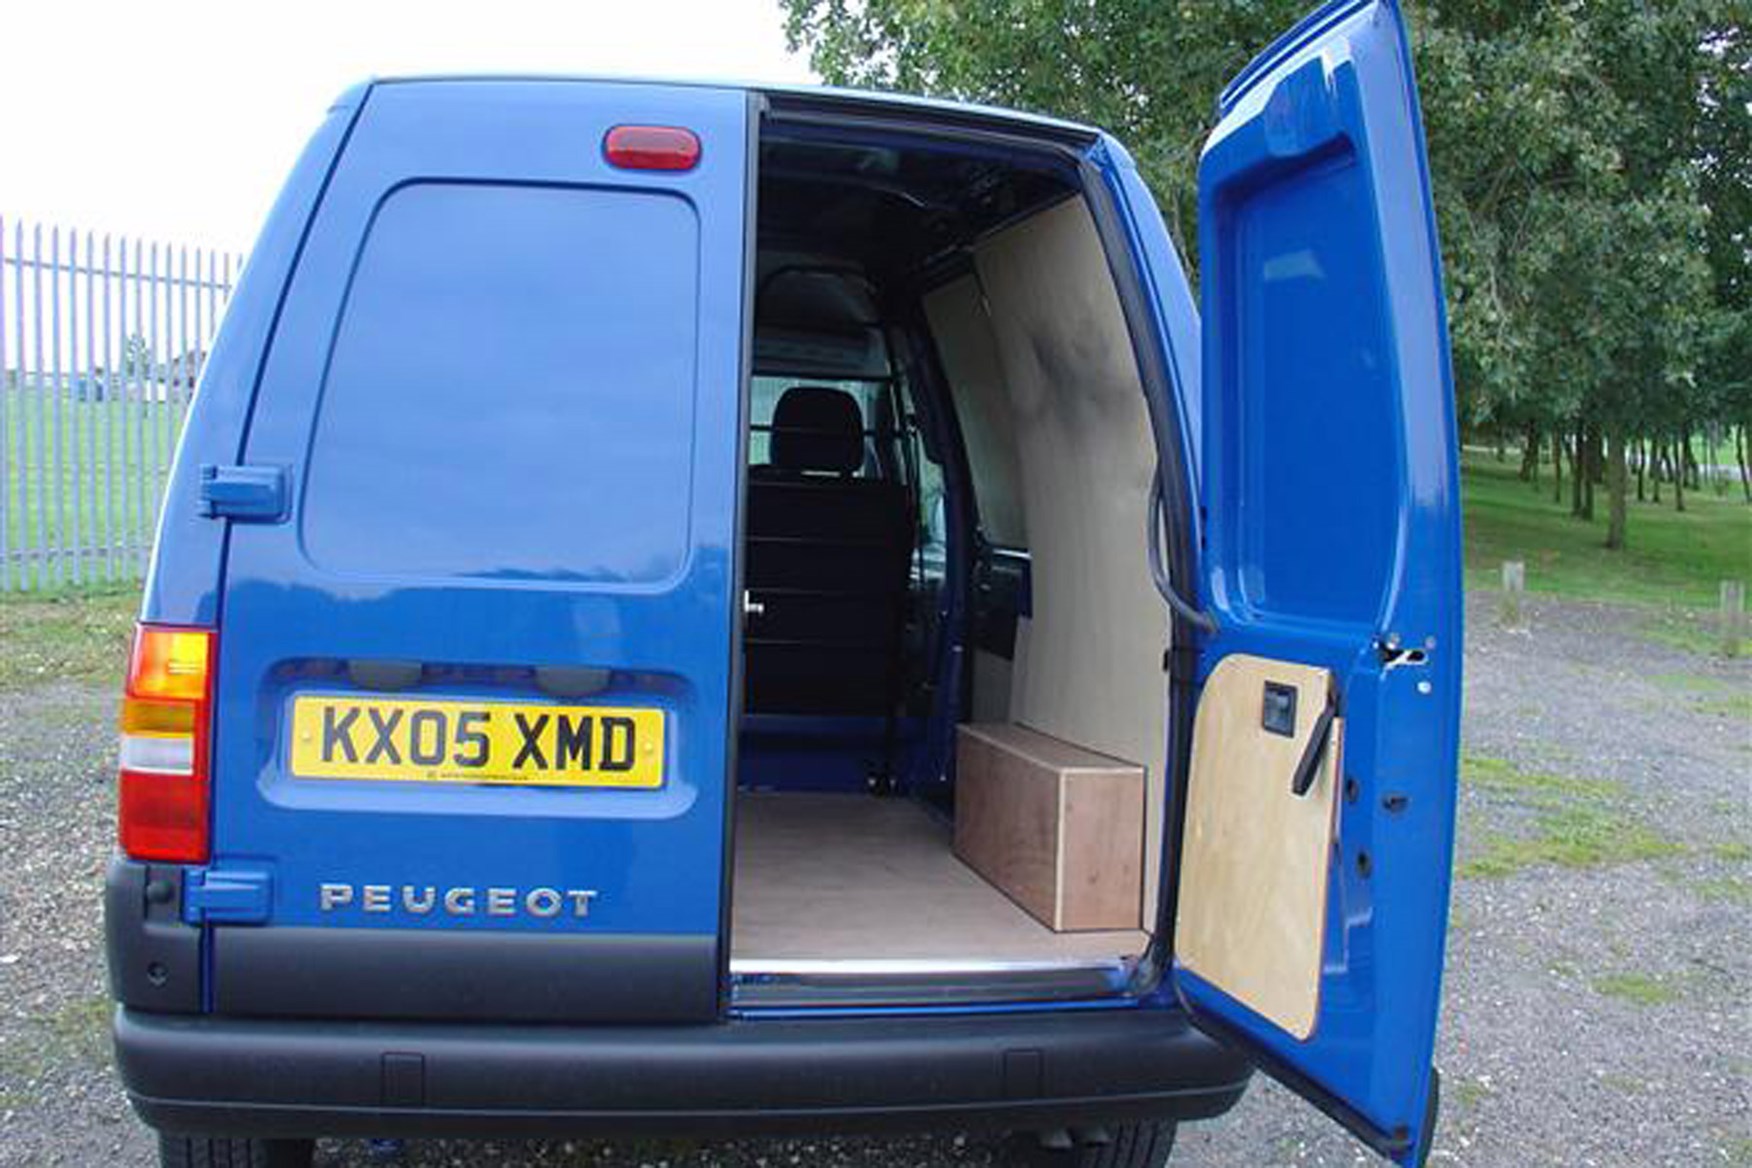 Peugeot Expert review on Parkers Vans - load area access